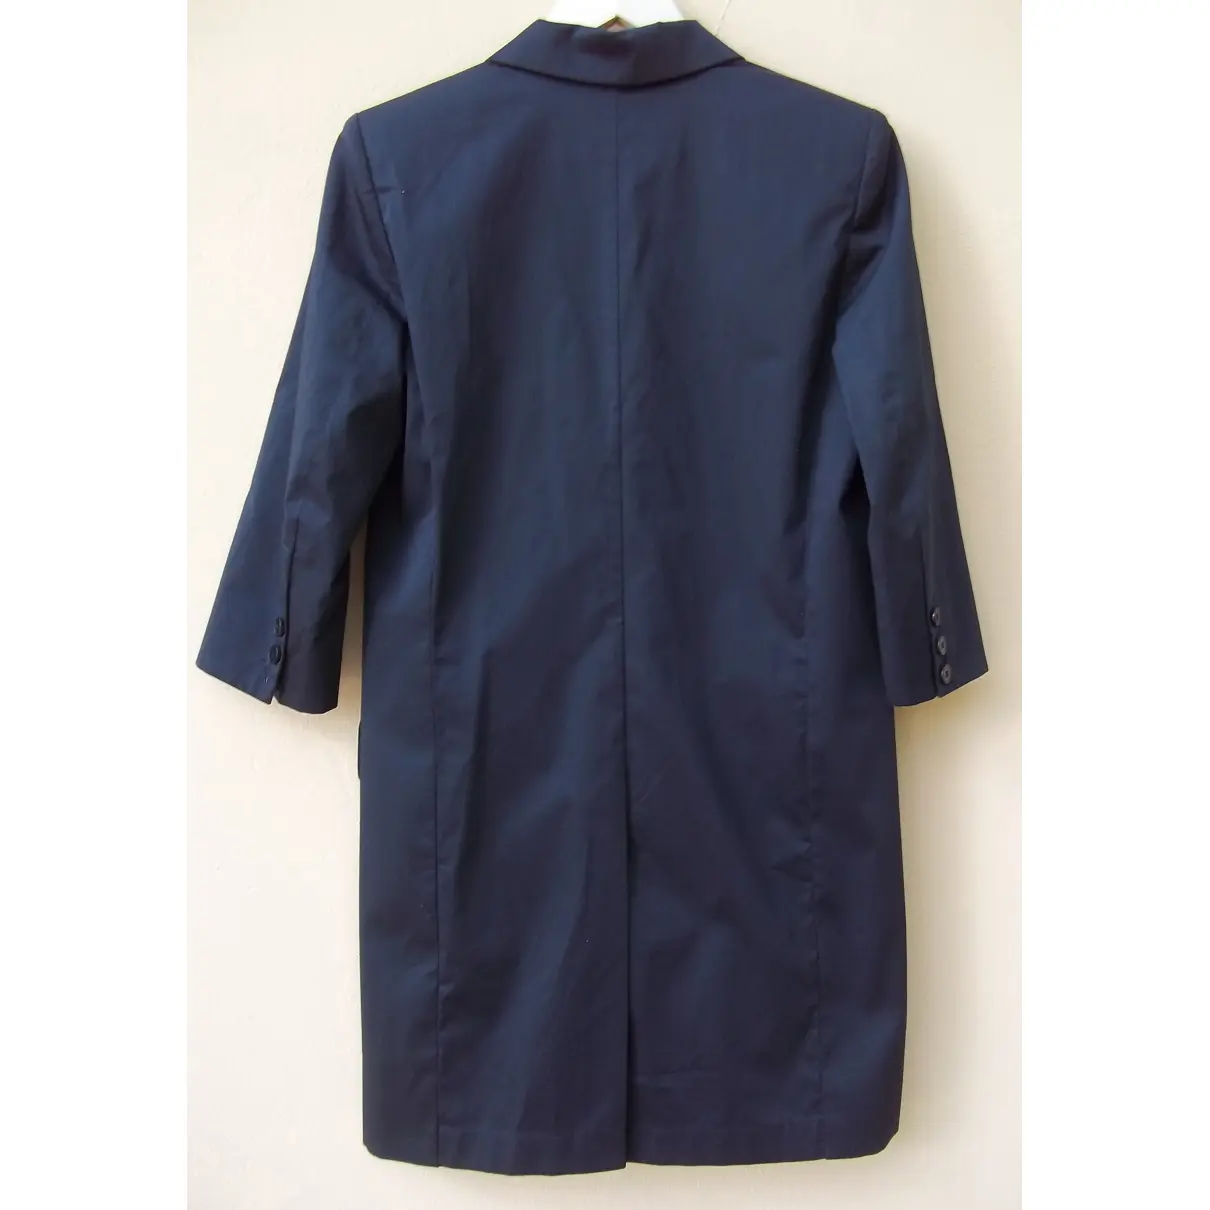 Buy Barbara Bui Navy Cotton Jacket online